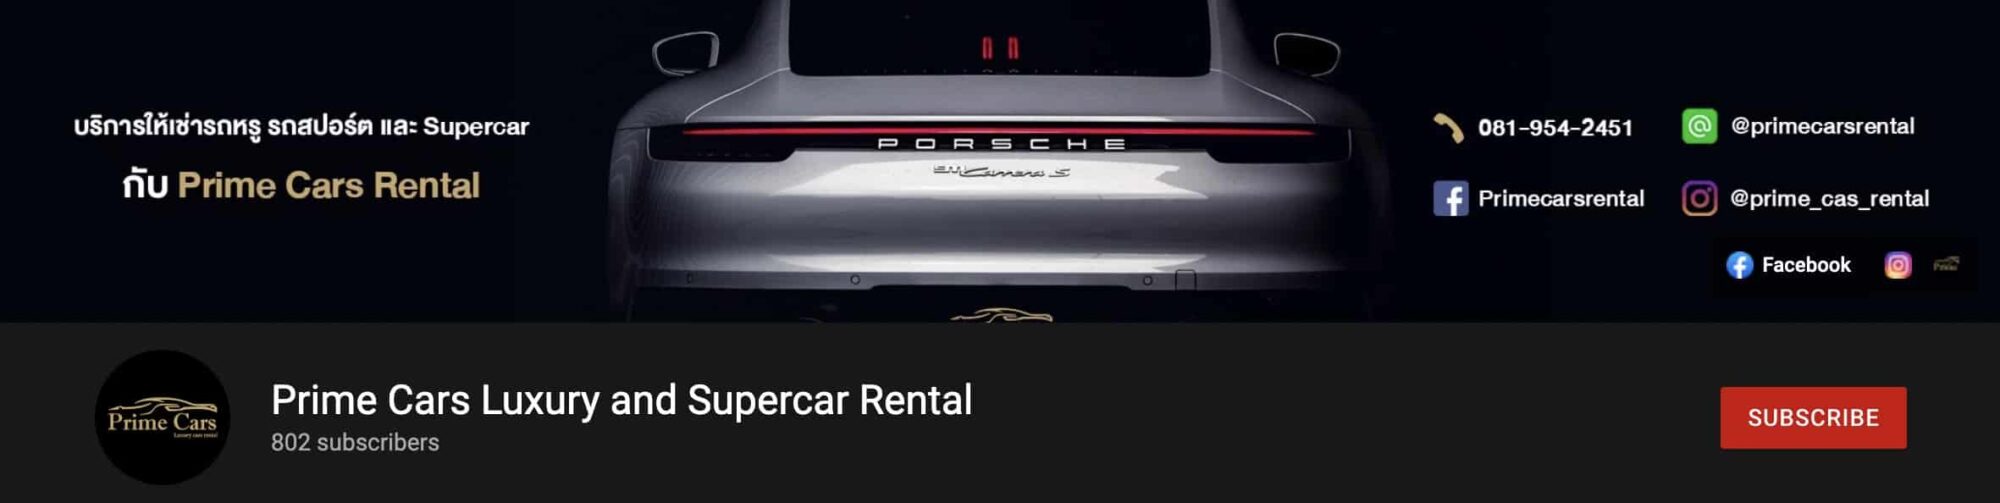 Prime Cars Rental YouTube